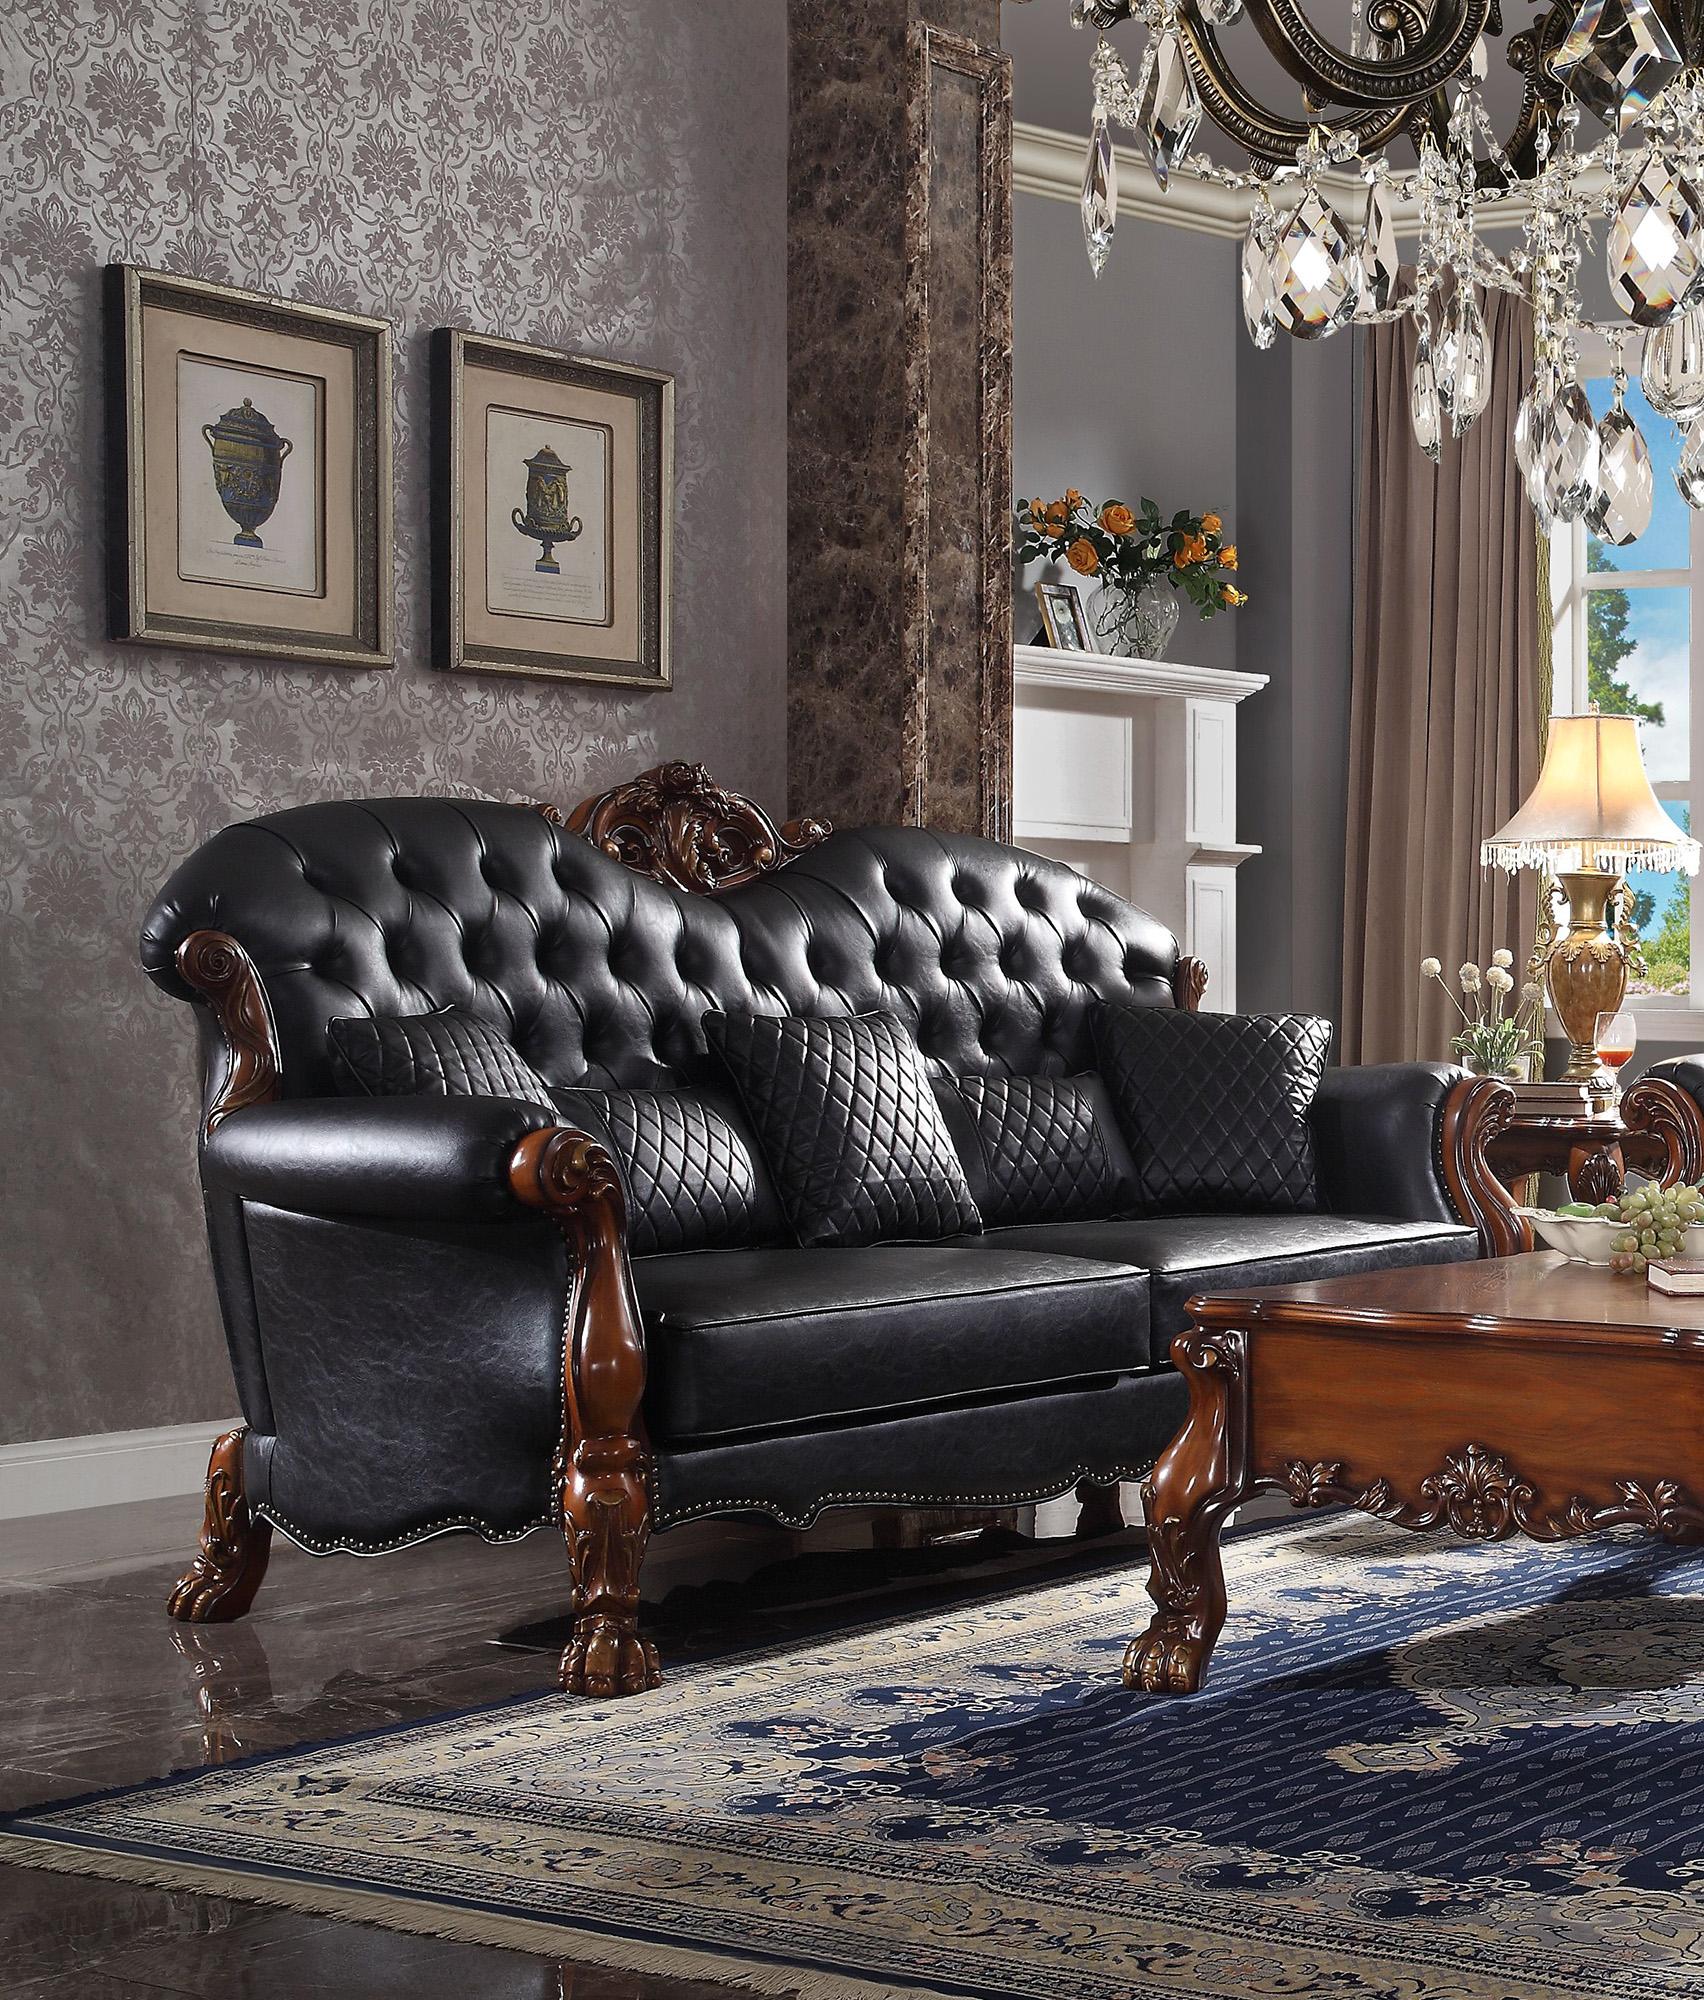 Traditional, Vintage Sofa Dresden 58230 58230 in Oak, Cherry, Black PU